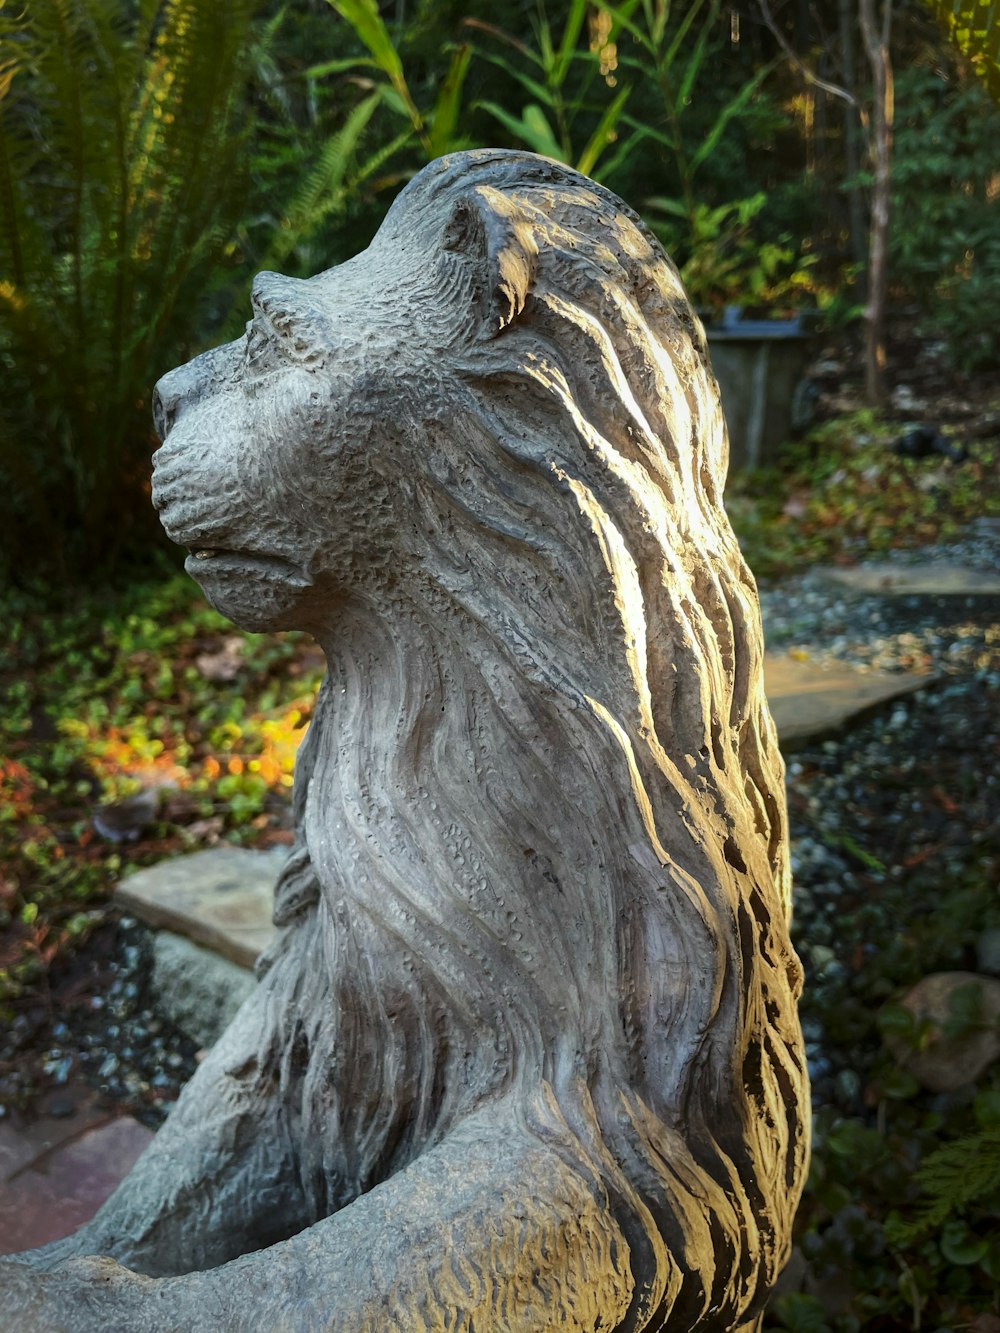 Una estatua de un león